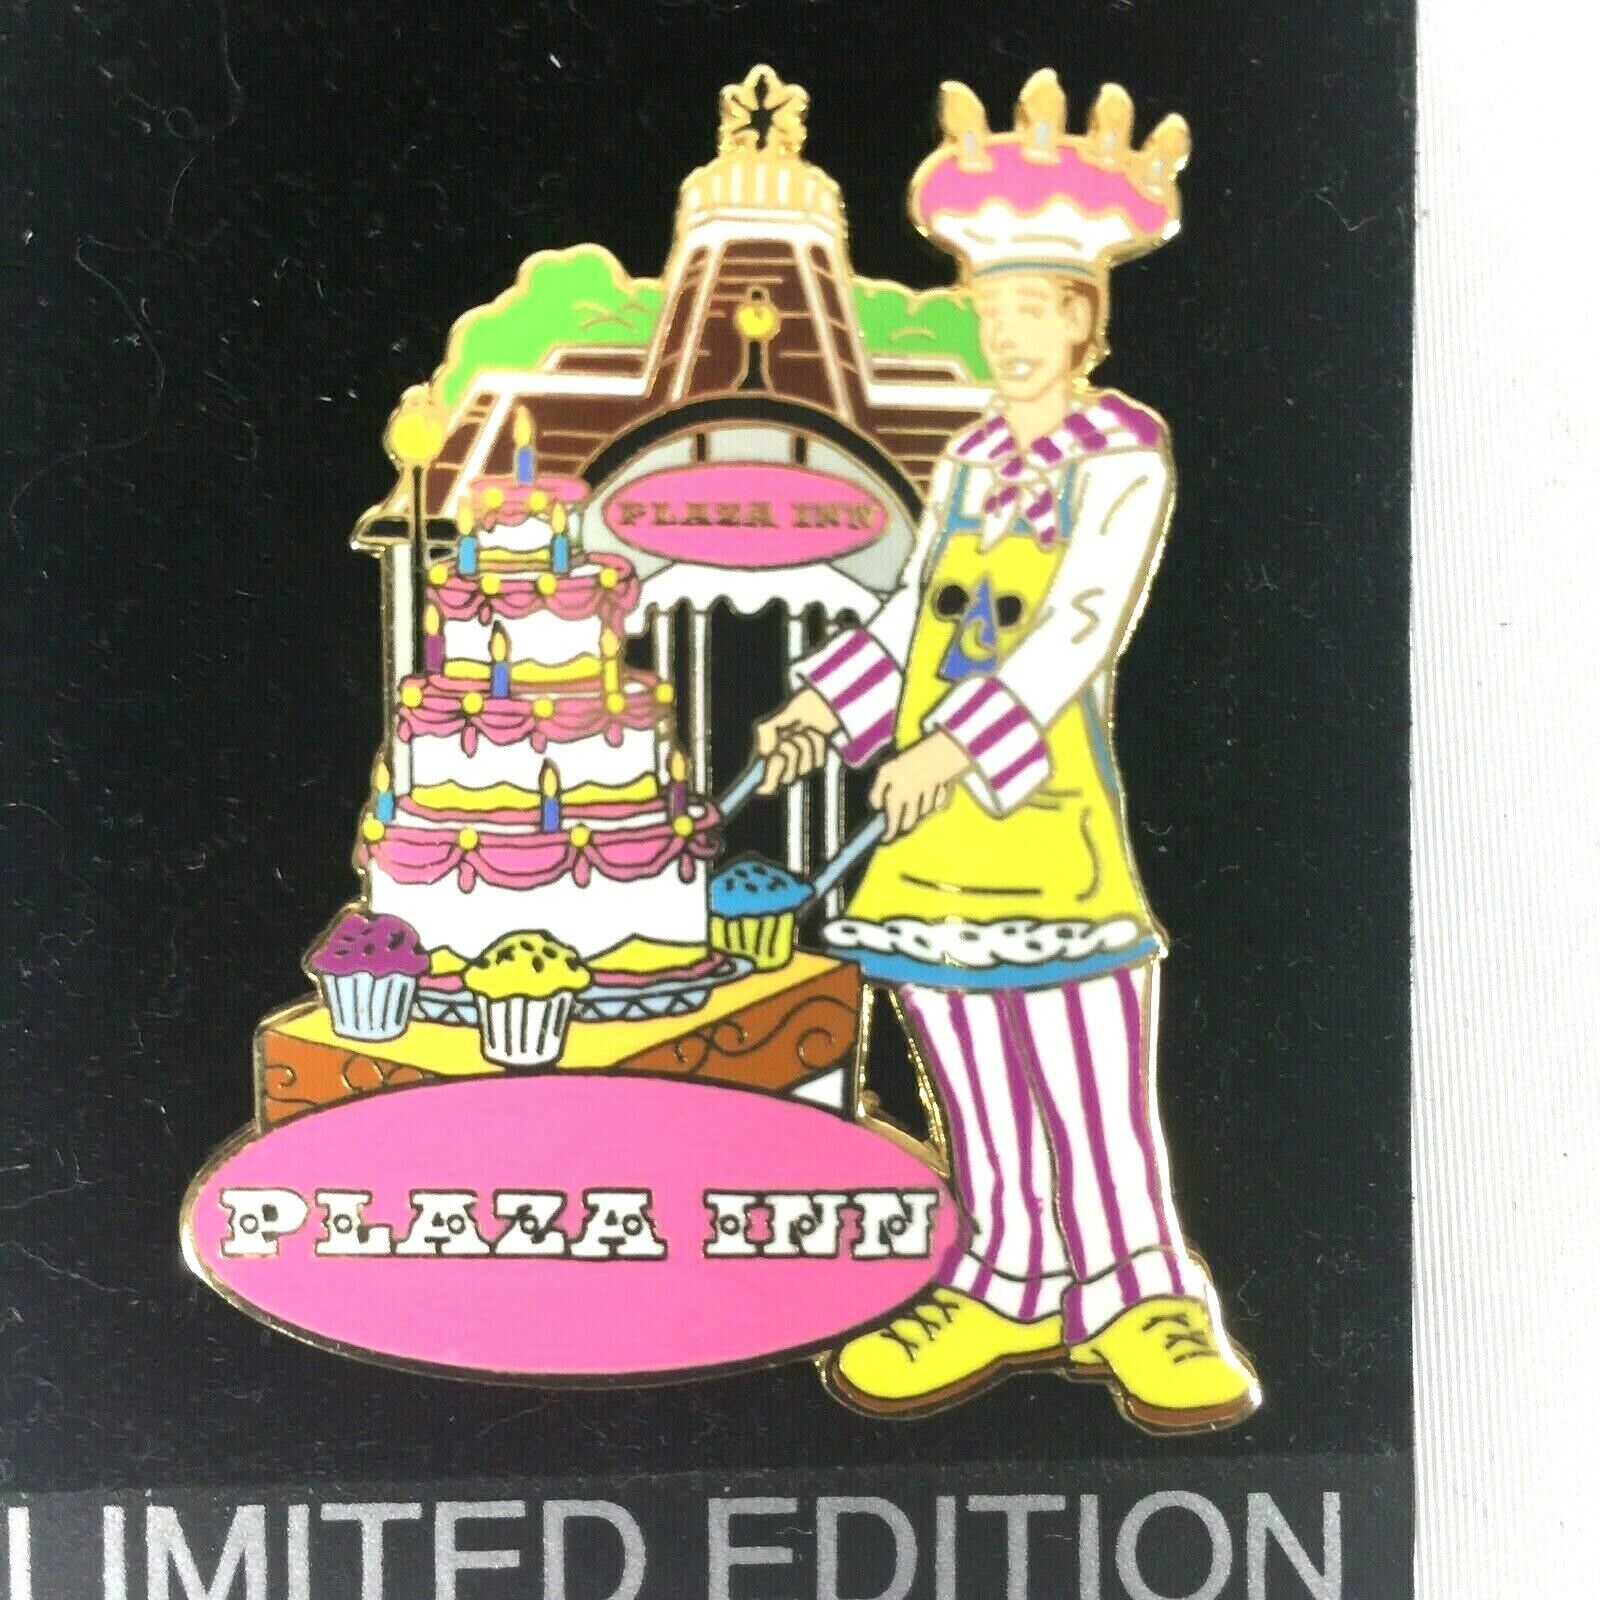 Vintage 2003 Disney ,PLAZA INN, Limited Edition Pass Holder Pin,